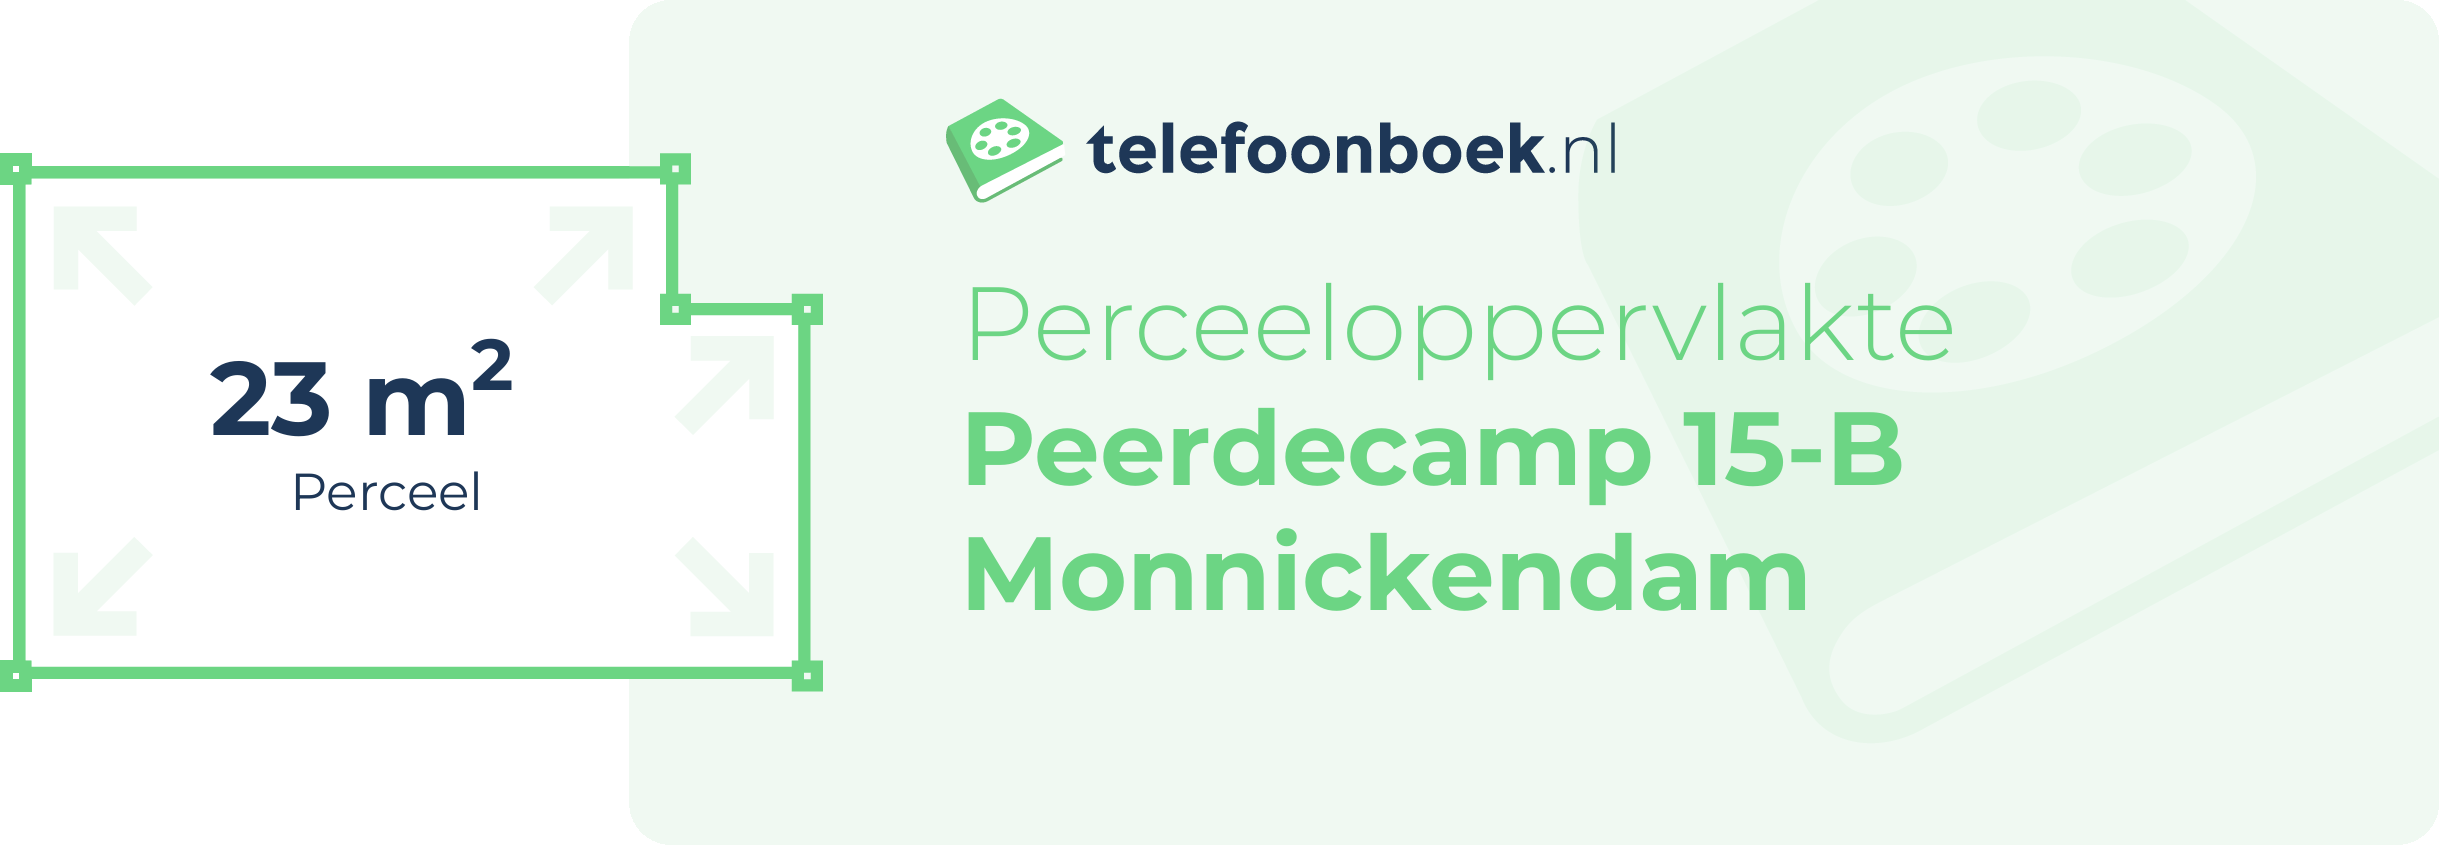 Perceeloppervlakte Peerdecamp 15-B Monnickendam